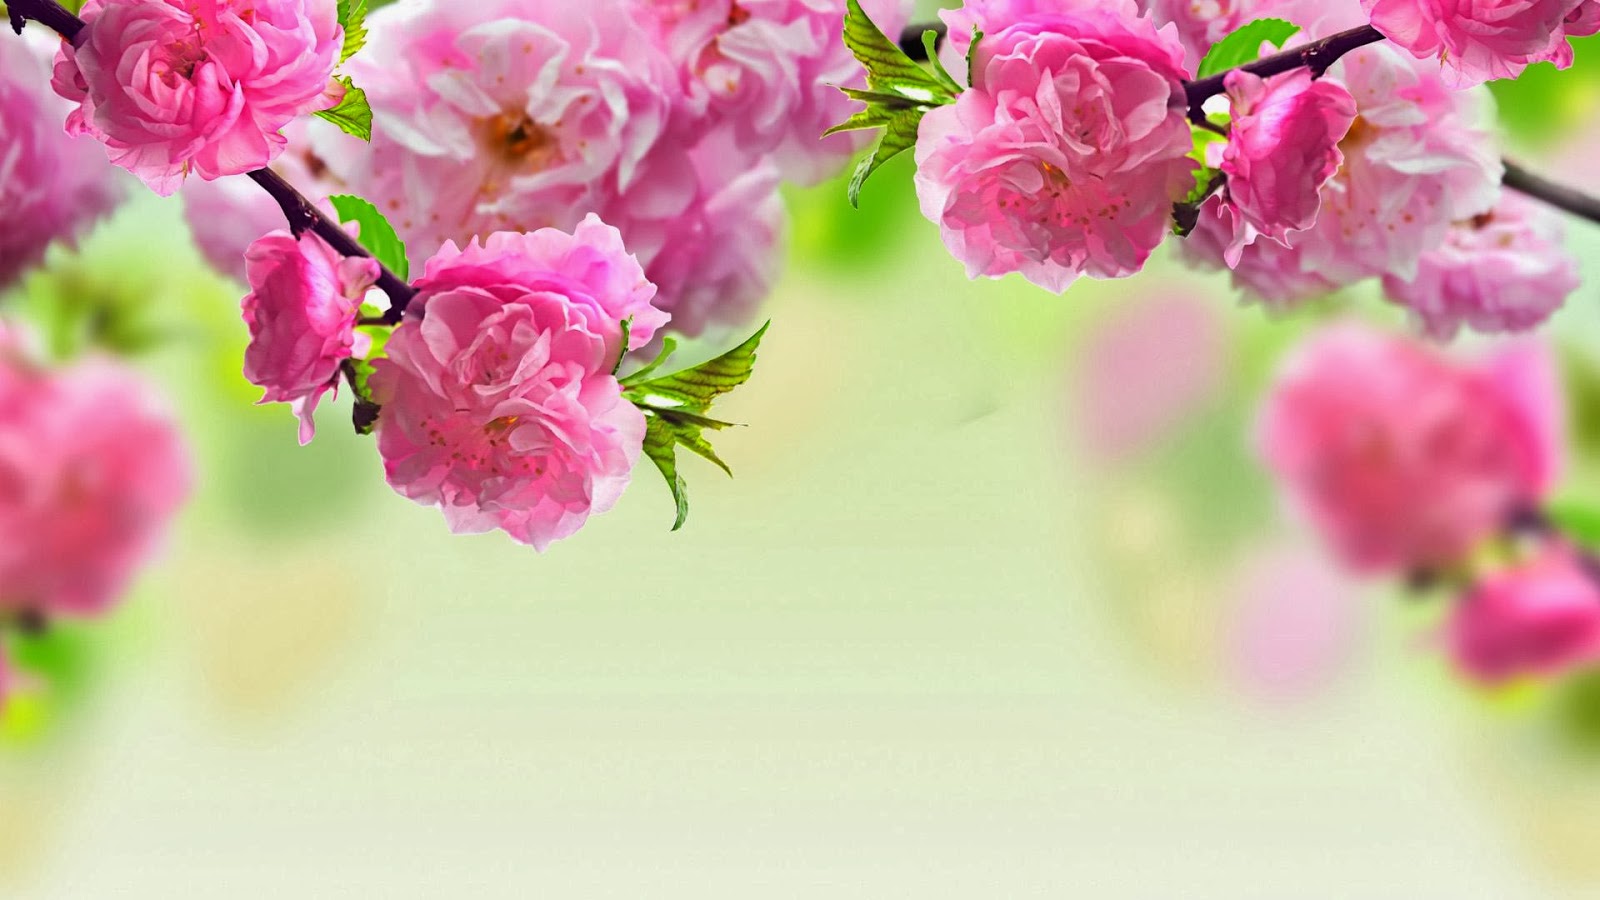 hd flower wallpapers 1080p,flower,pink,plant,spring,petal